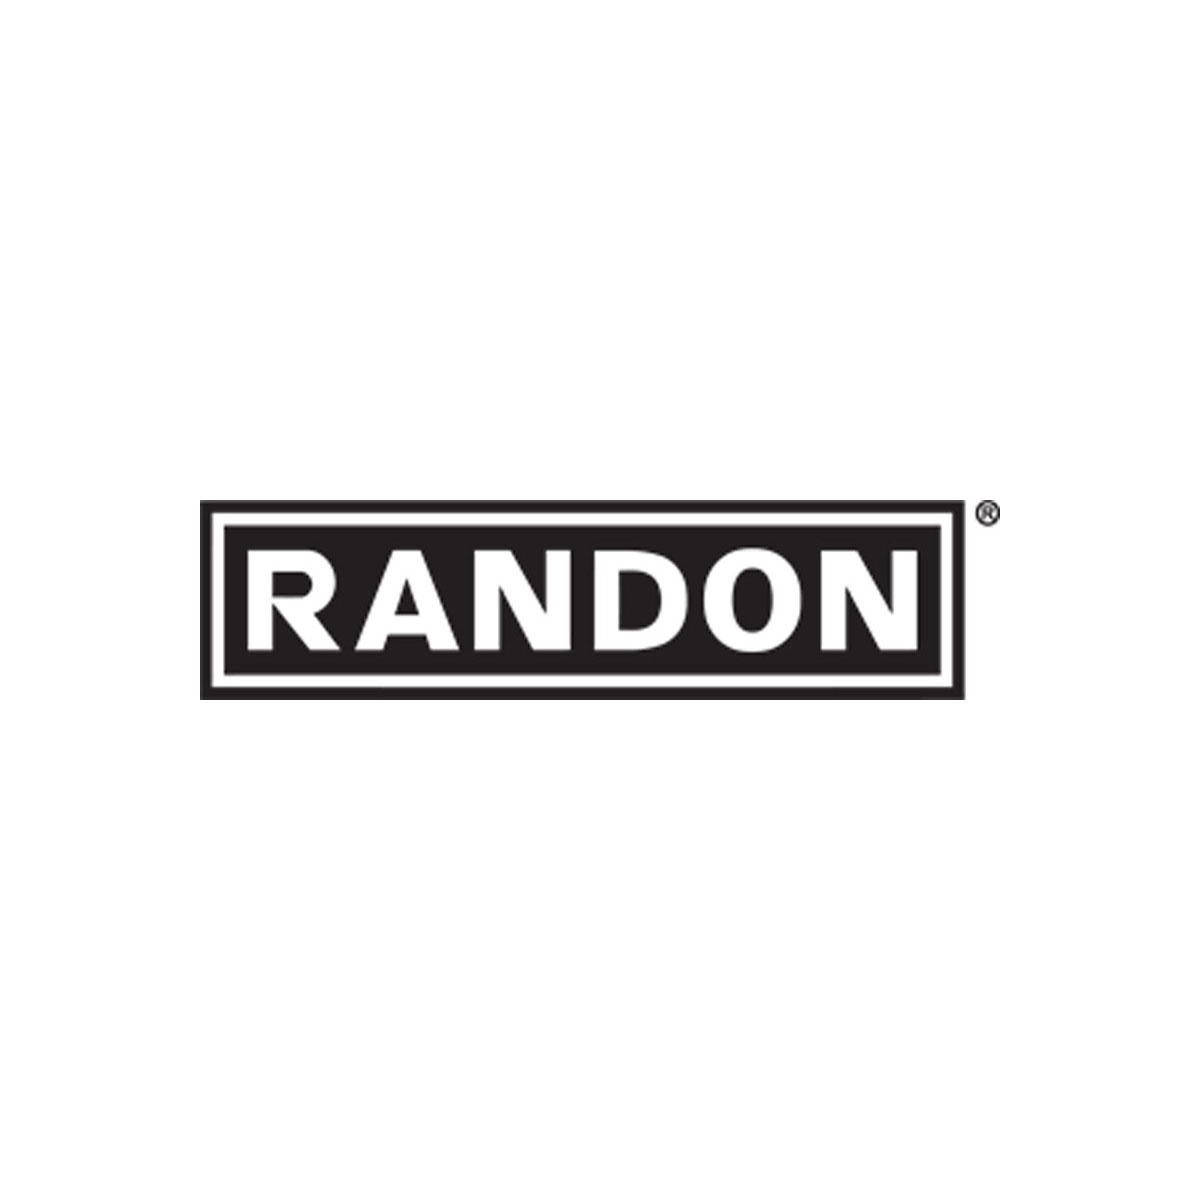 RANDON